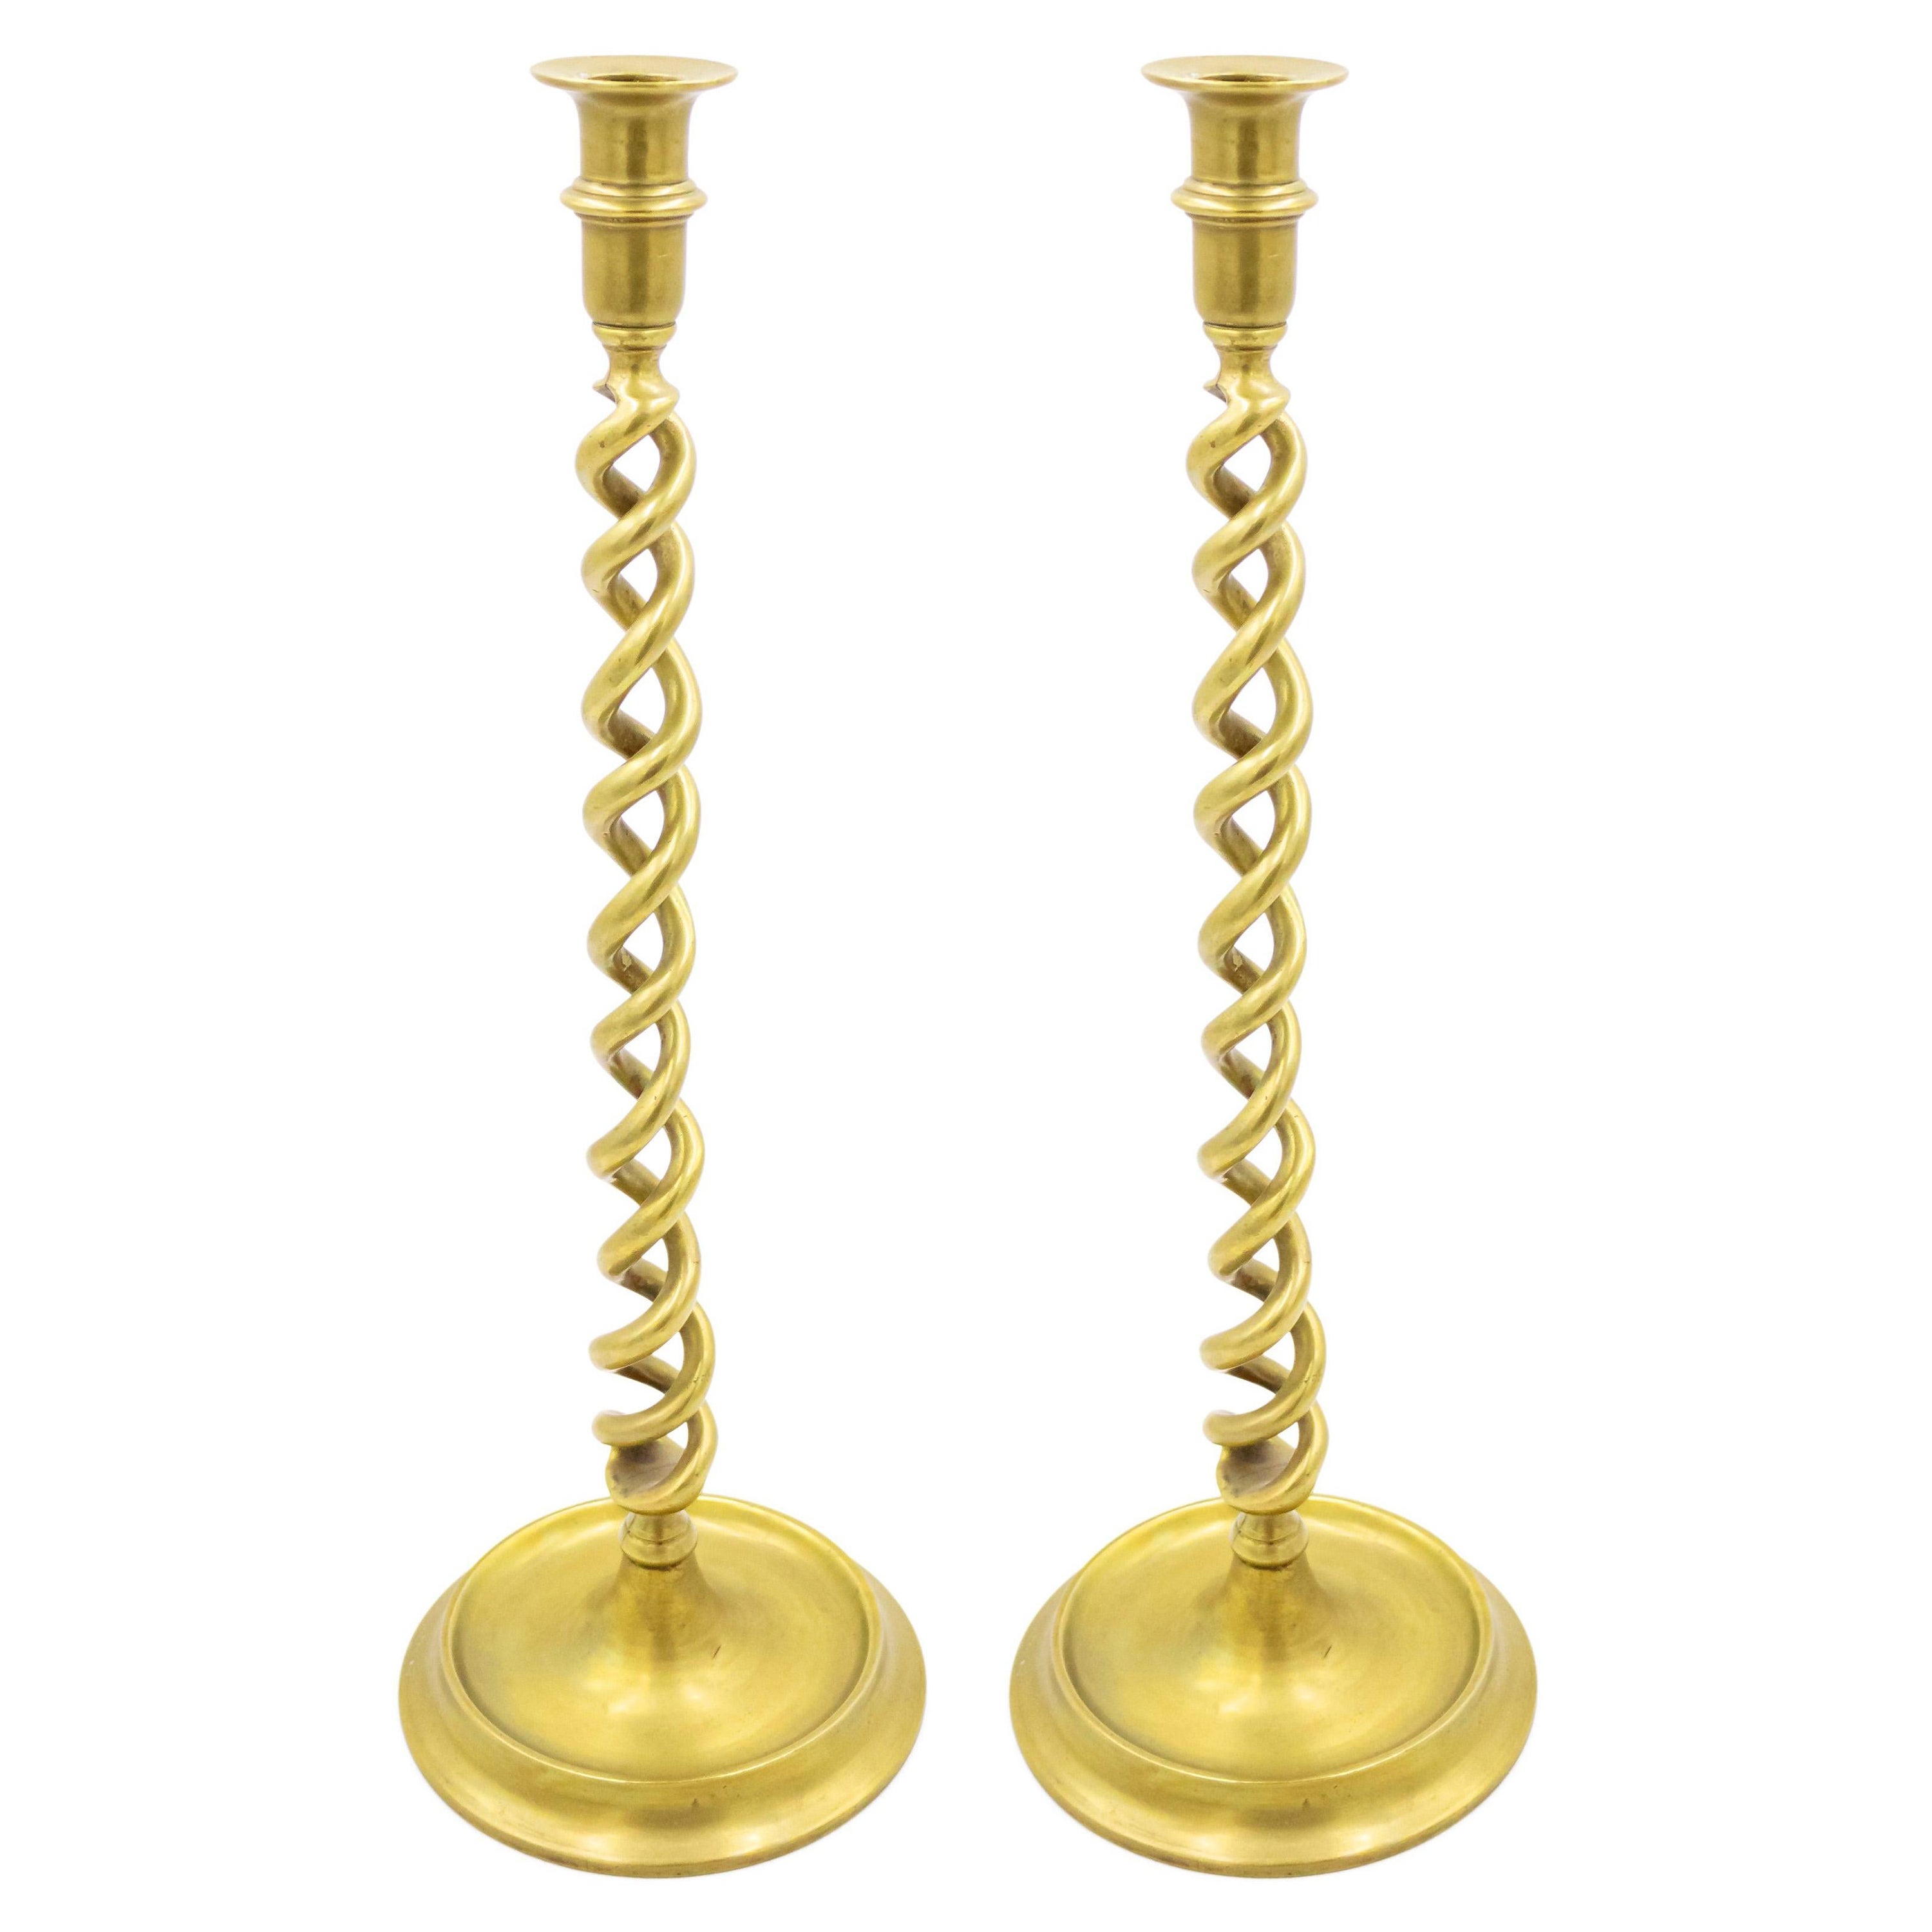 Pair of Italian Renaissance Style Brass Candlesticks